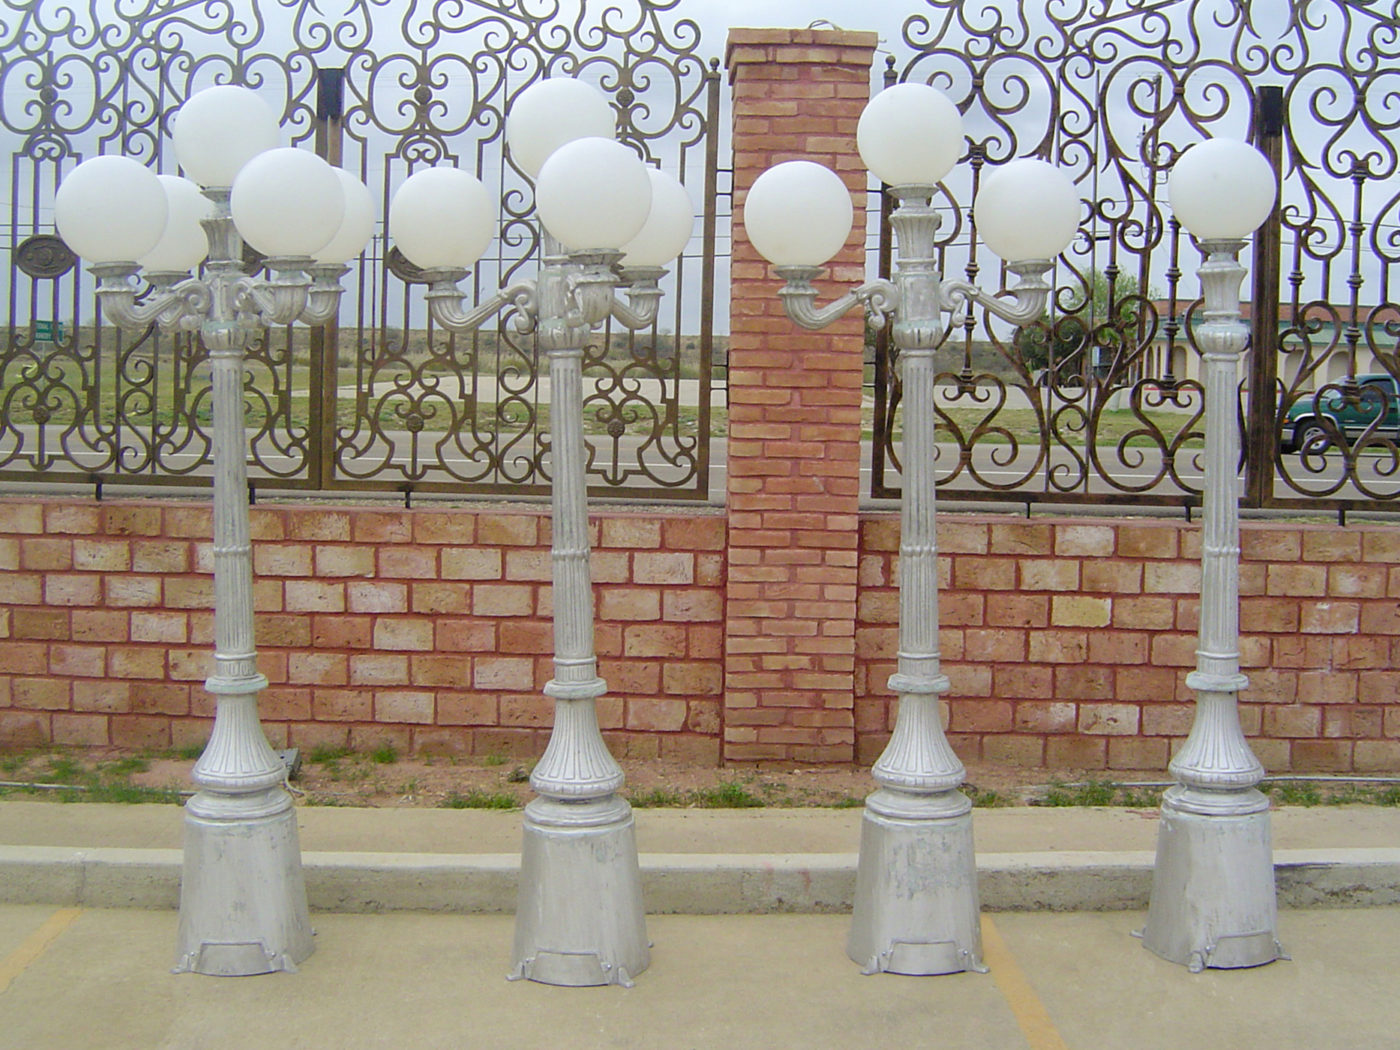 cast iron lamp post